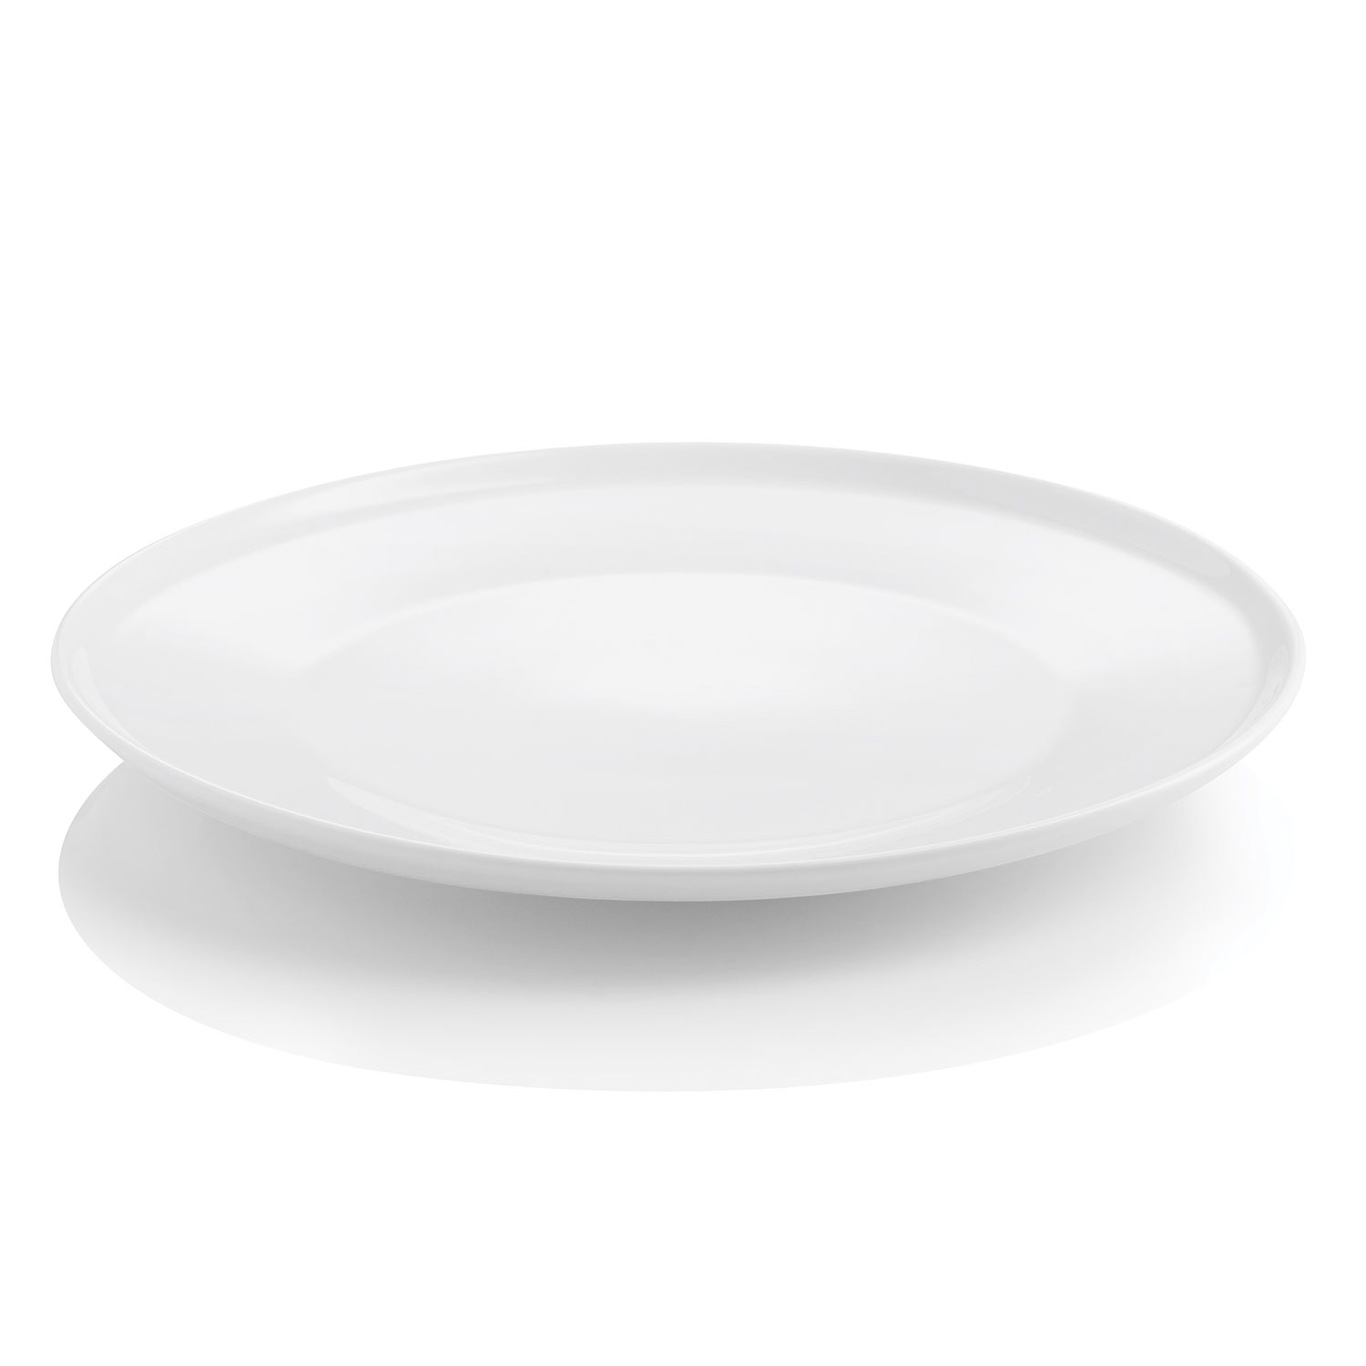 Enso Breakfast Plate 22 cm, White